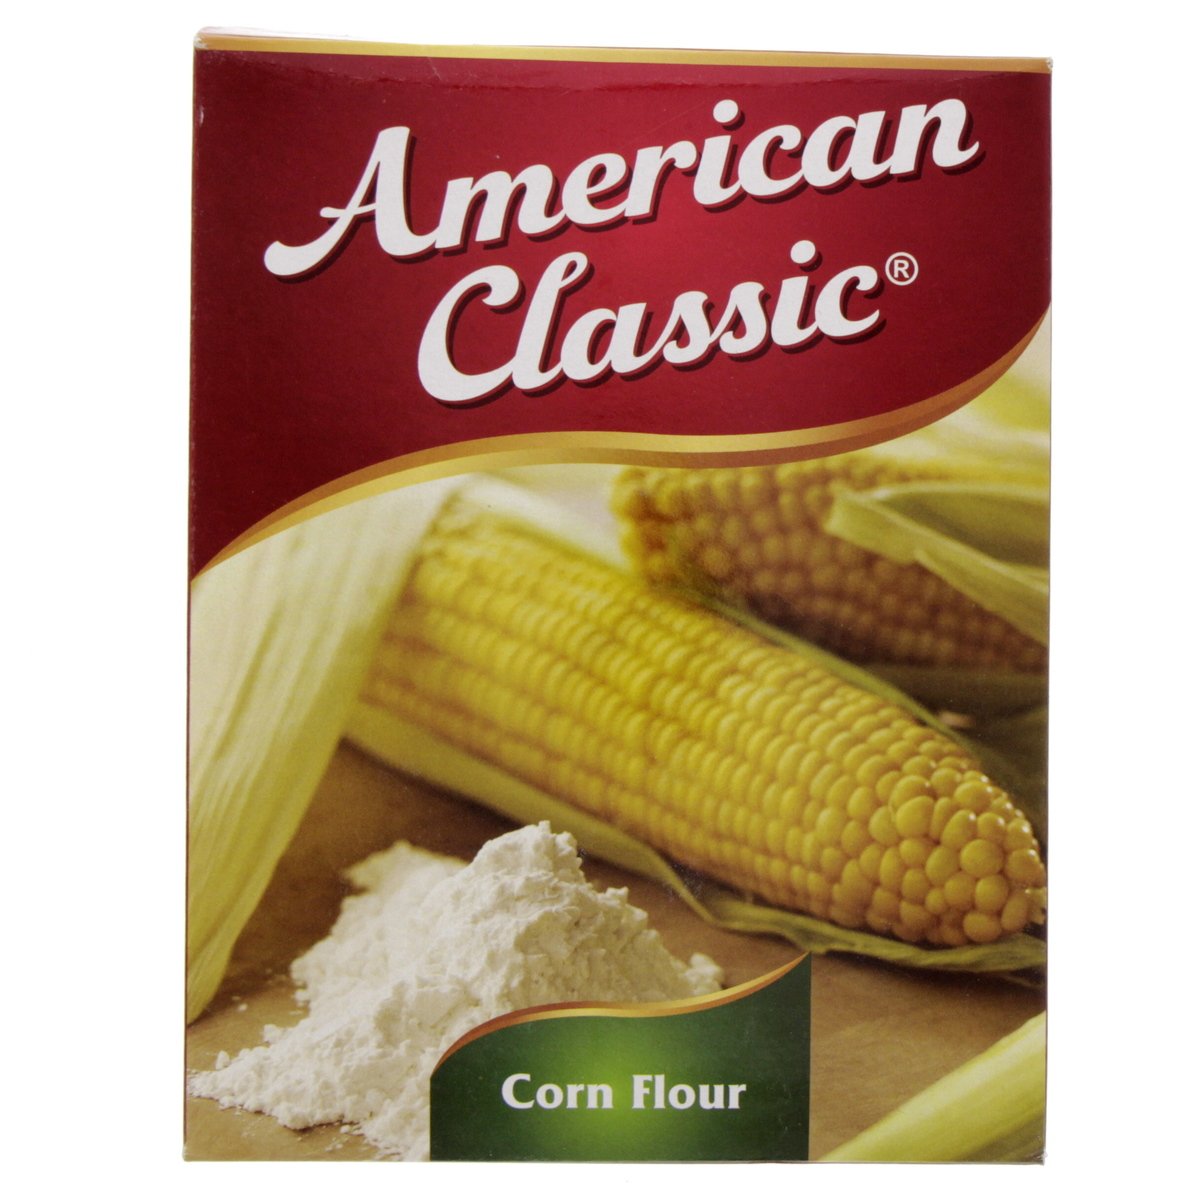 American Classic Corn Flour 400 g